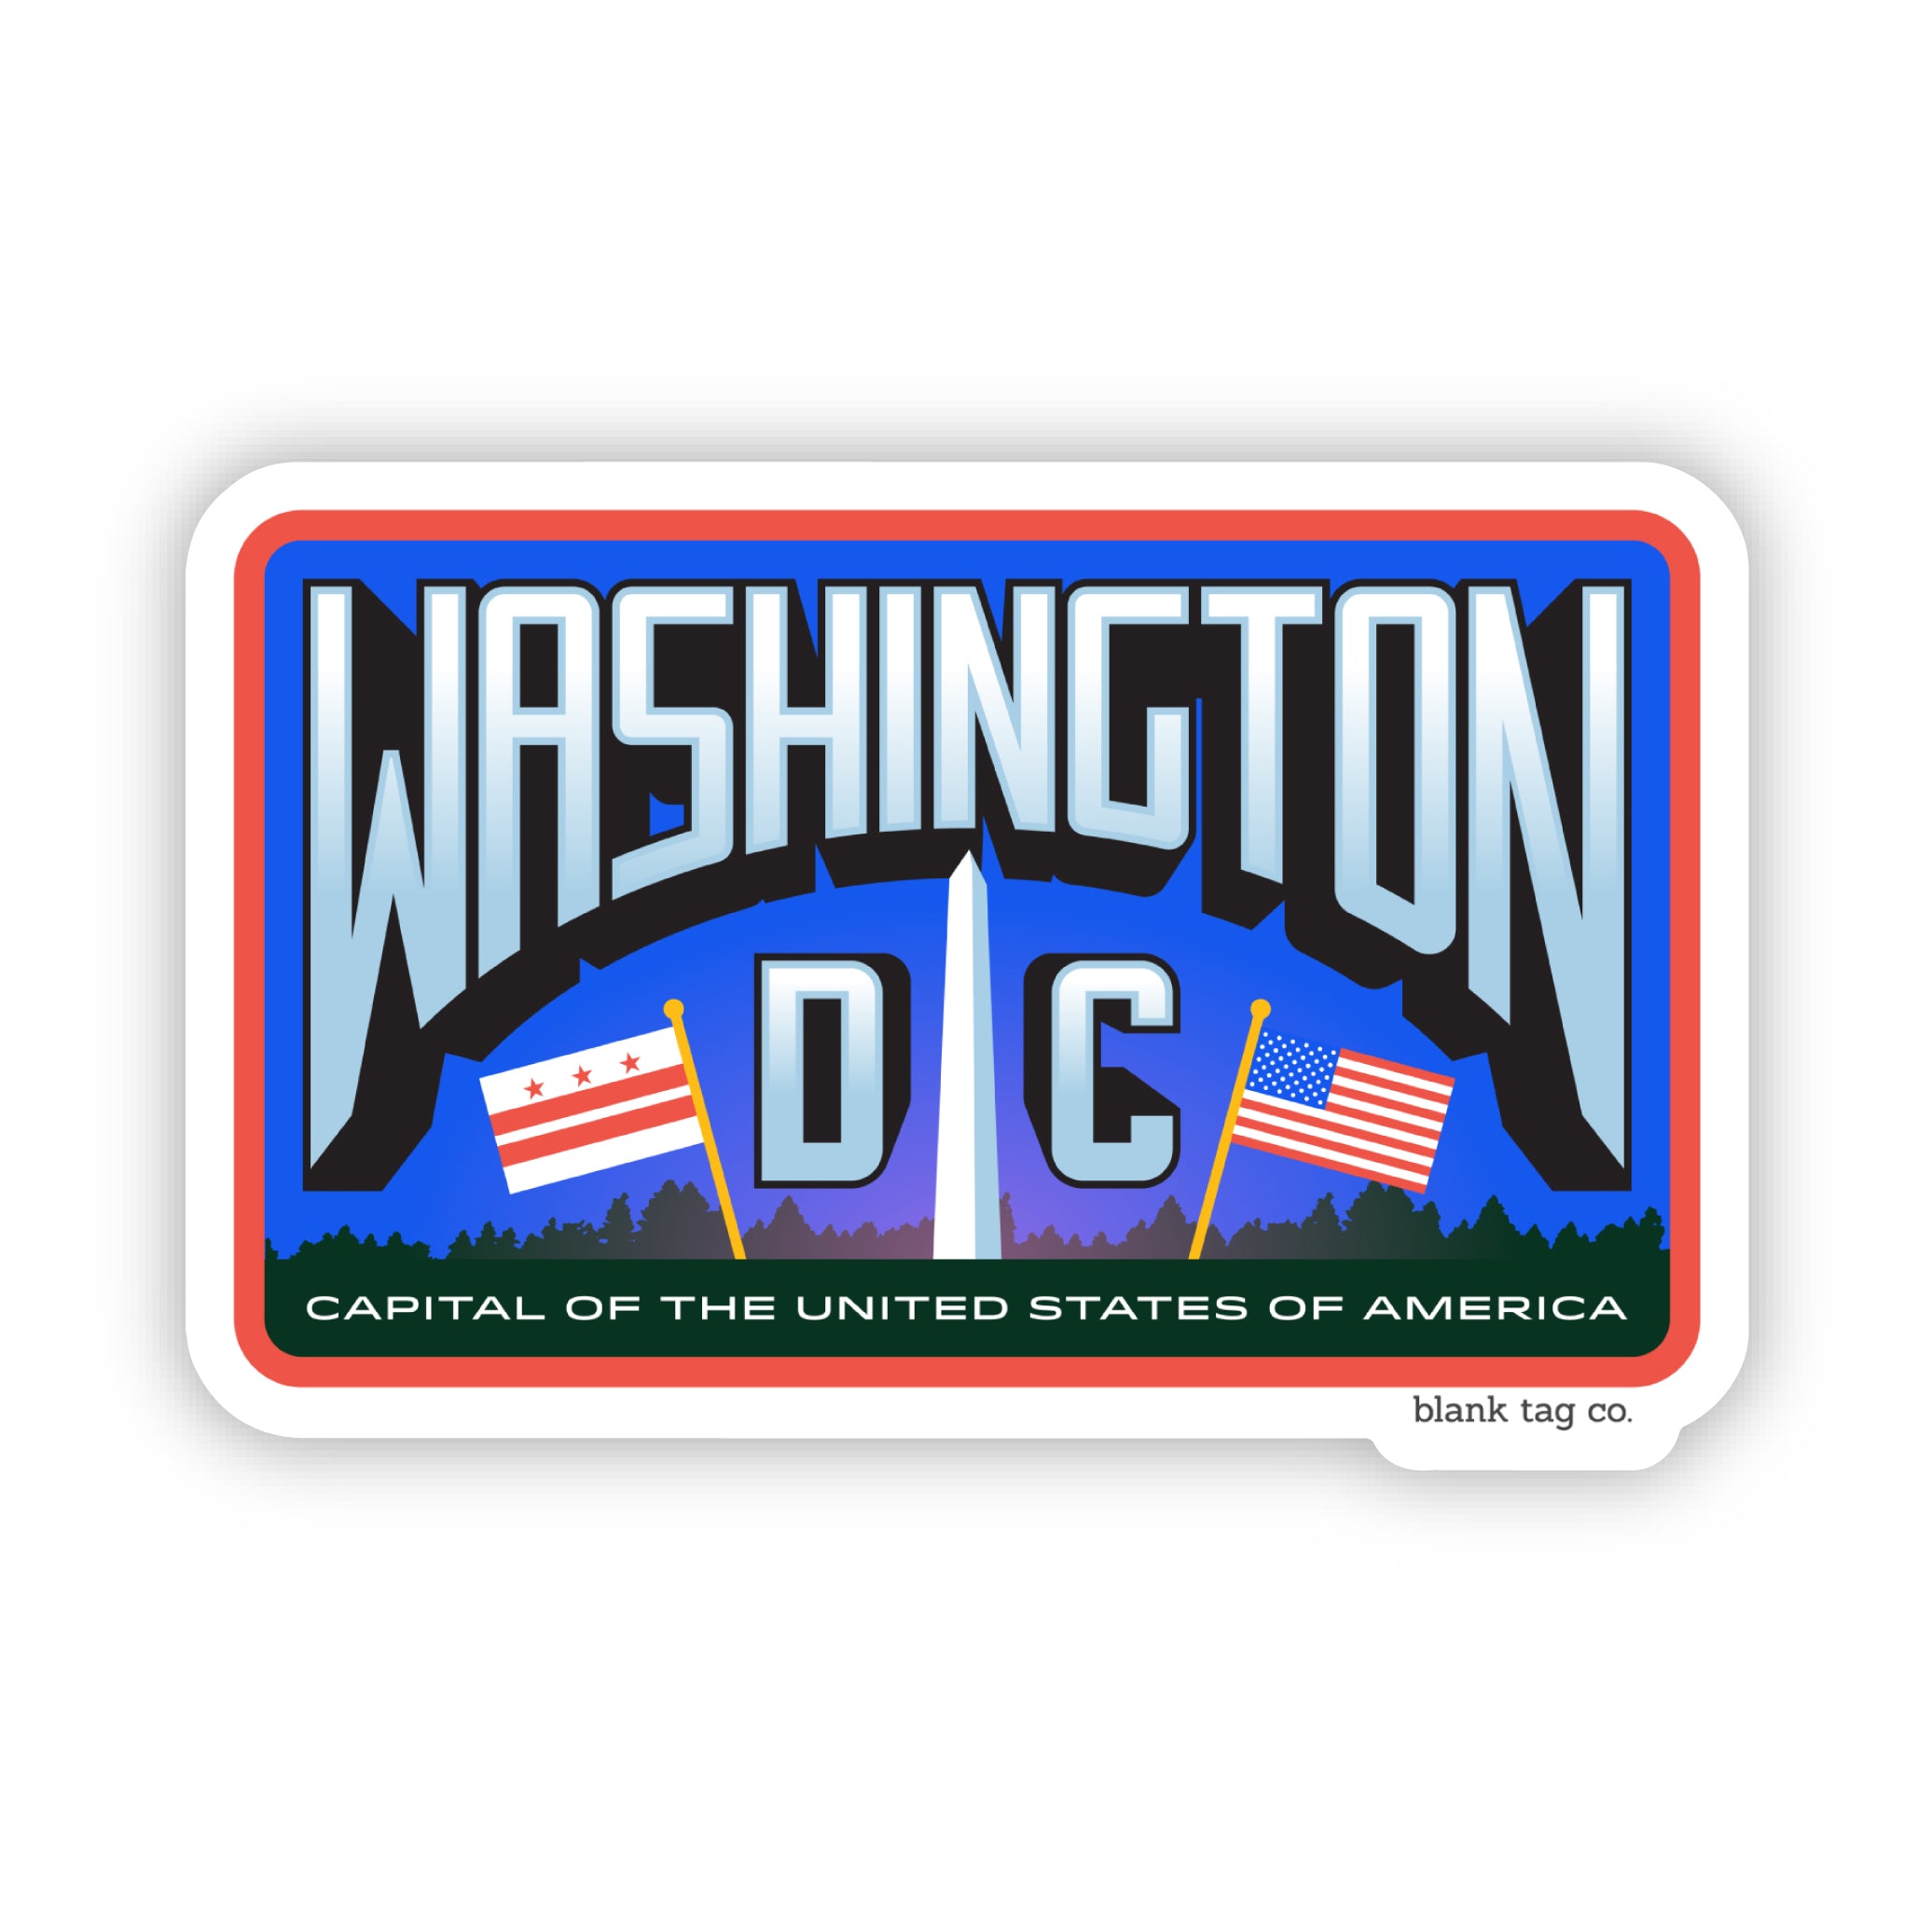 The Washington D.C. City Badge Sticker